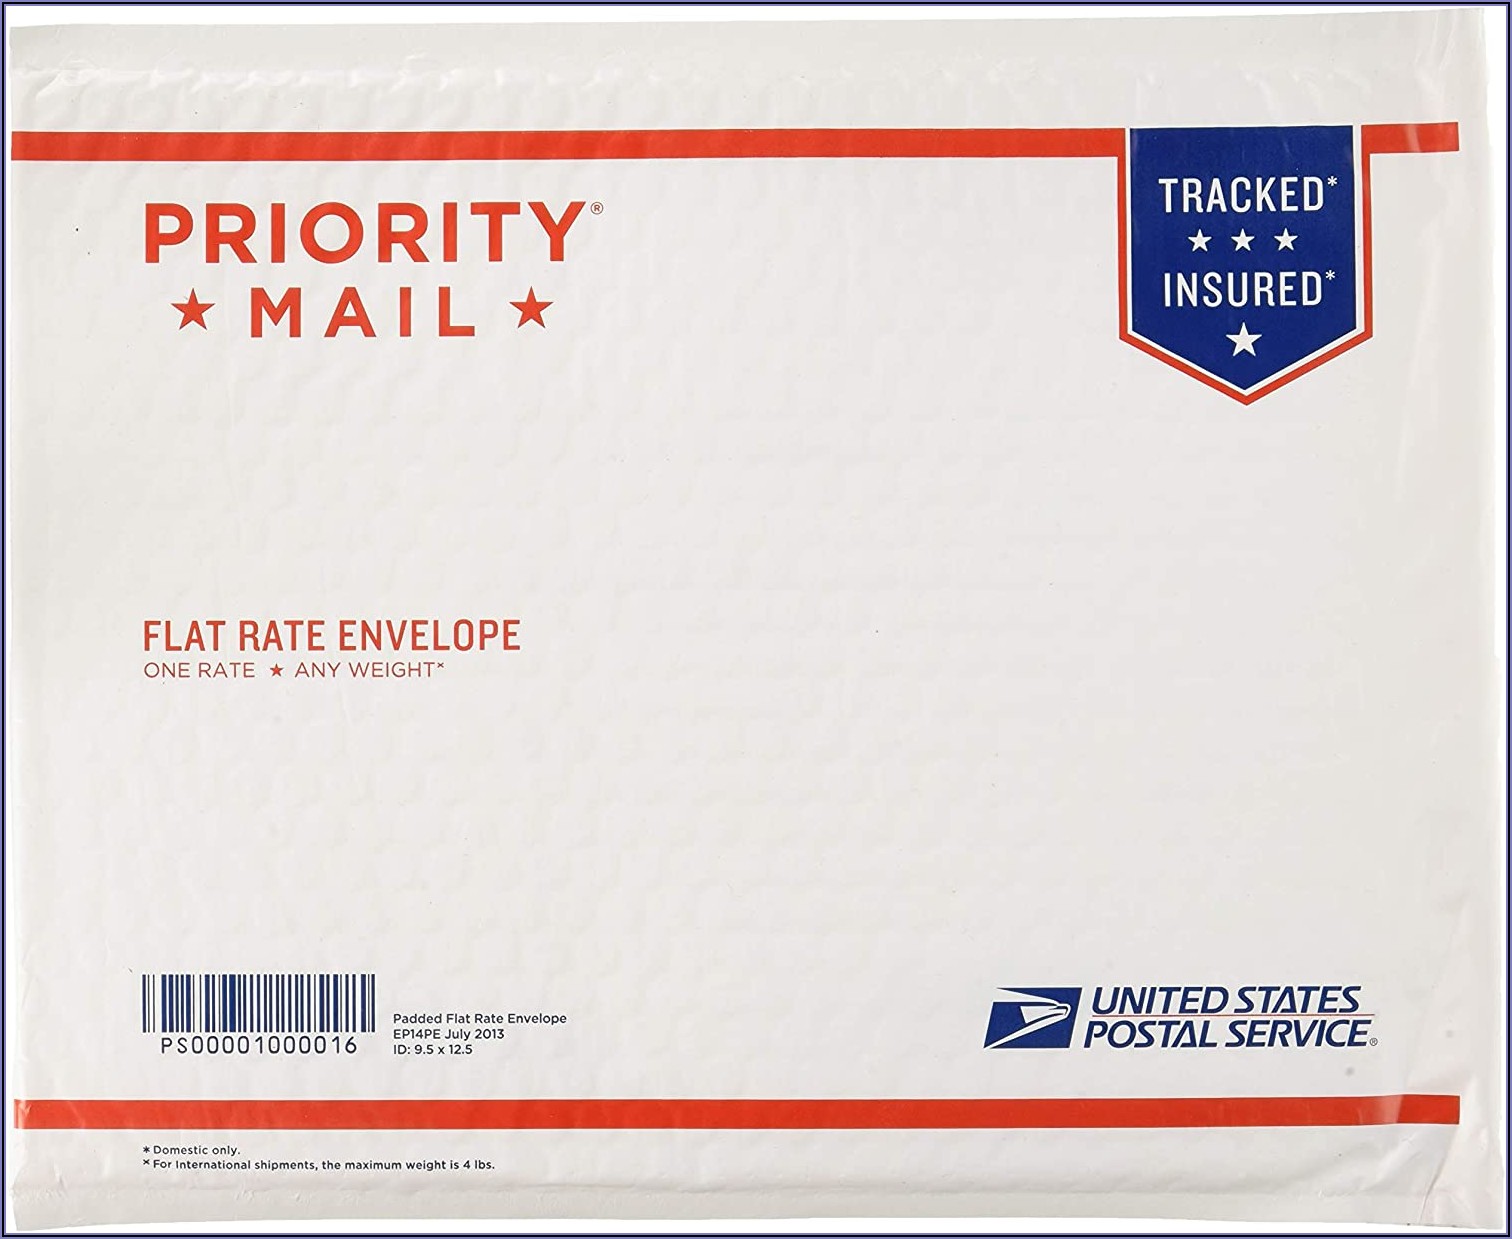 usps minimum envelope size